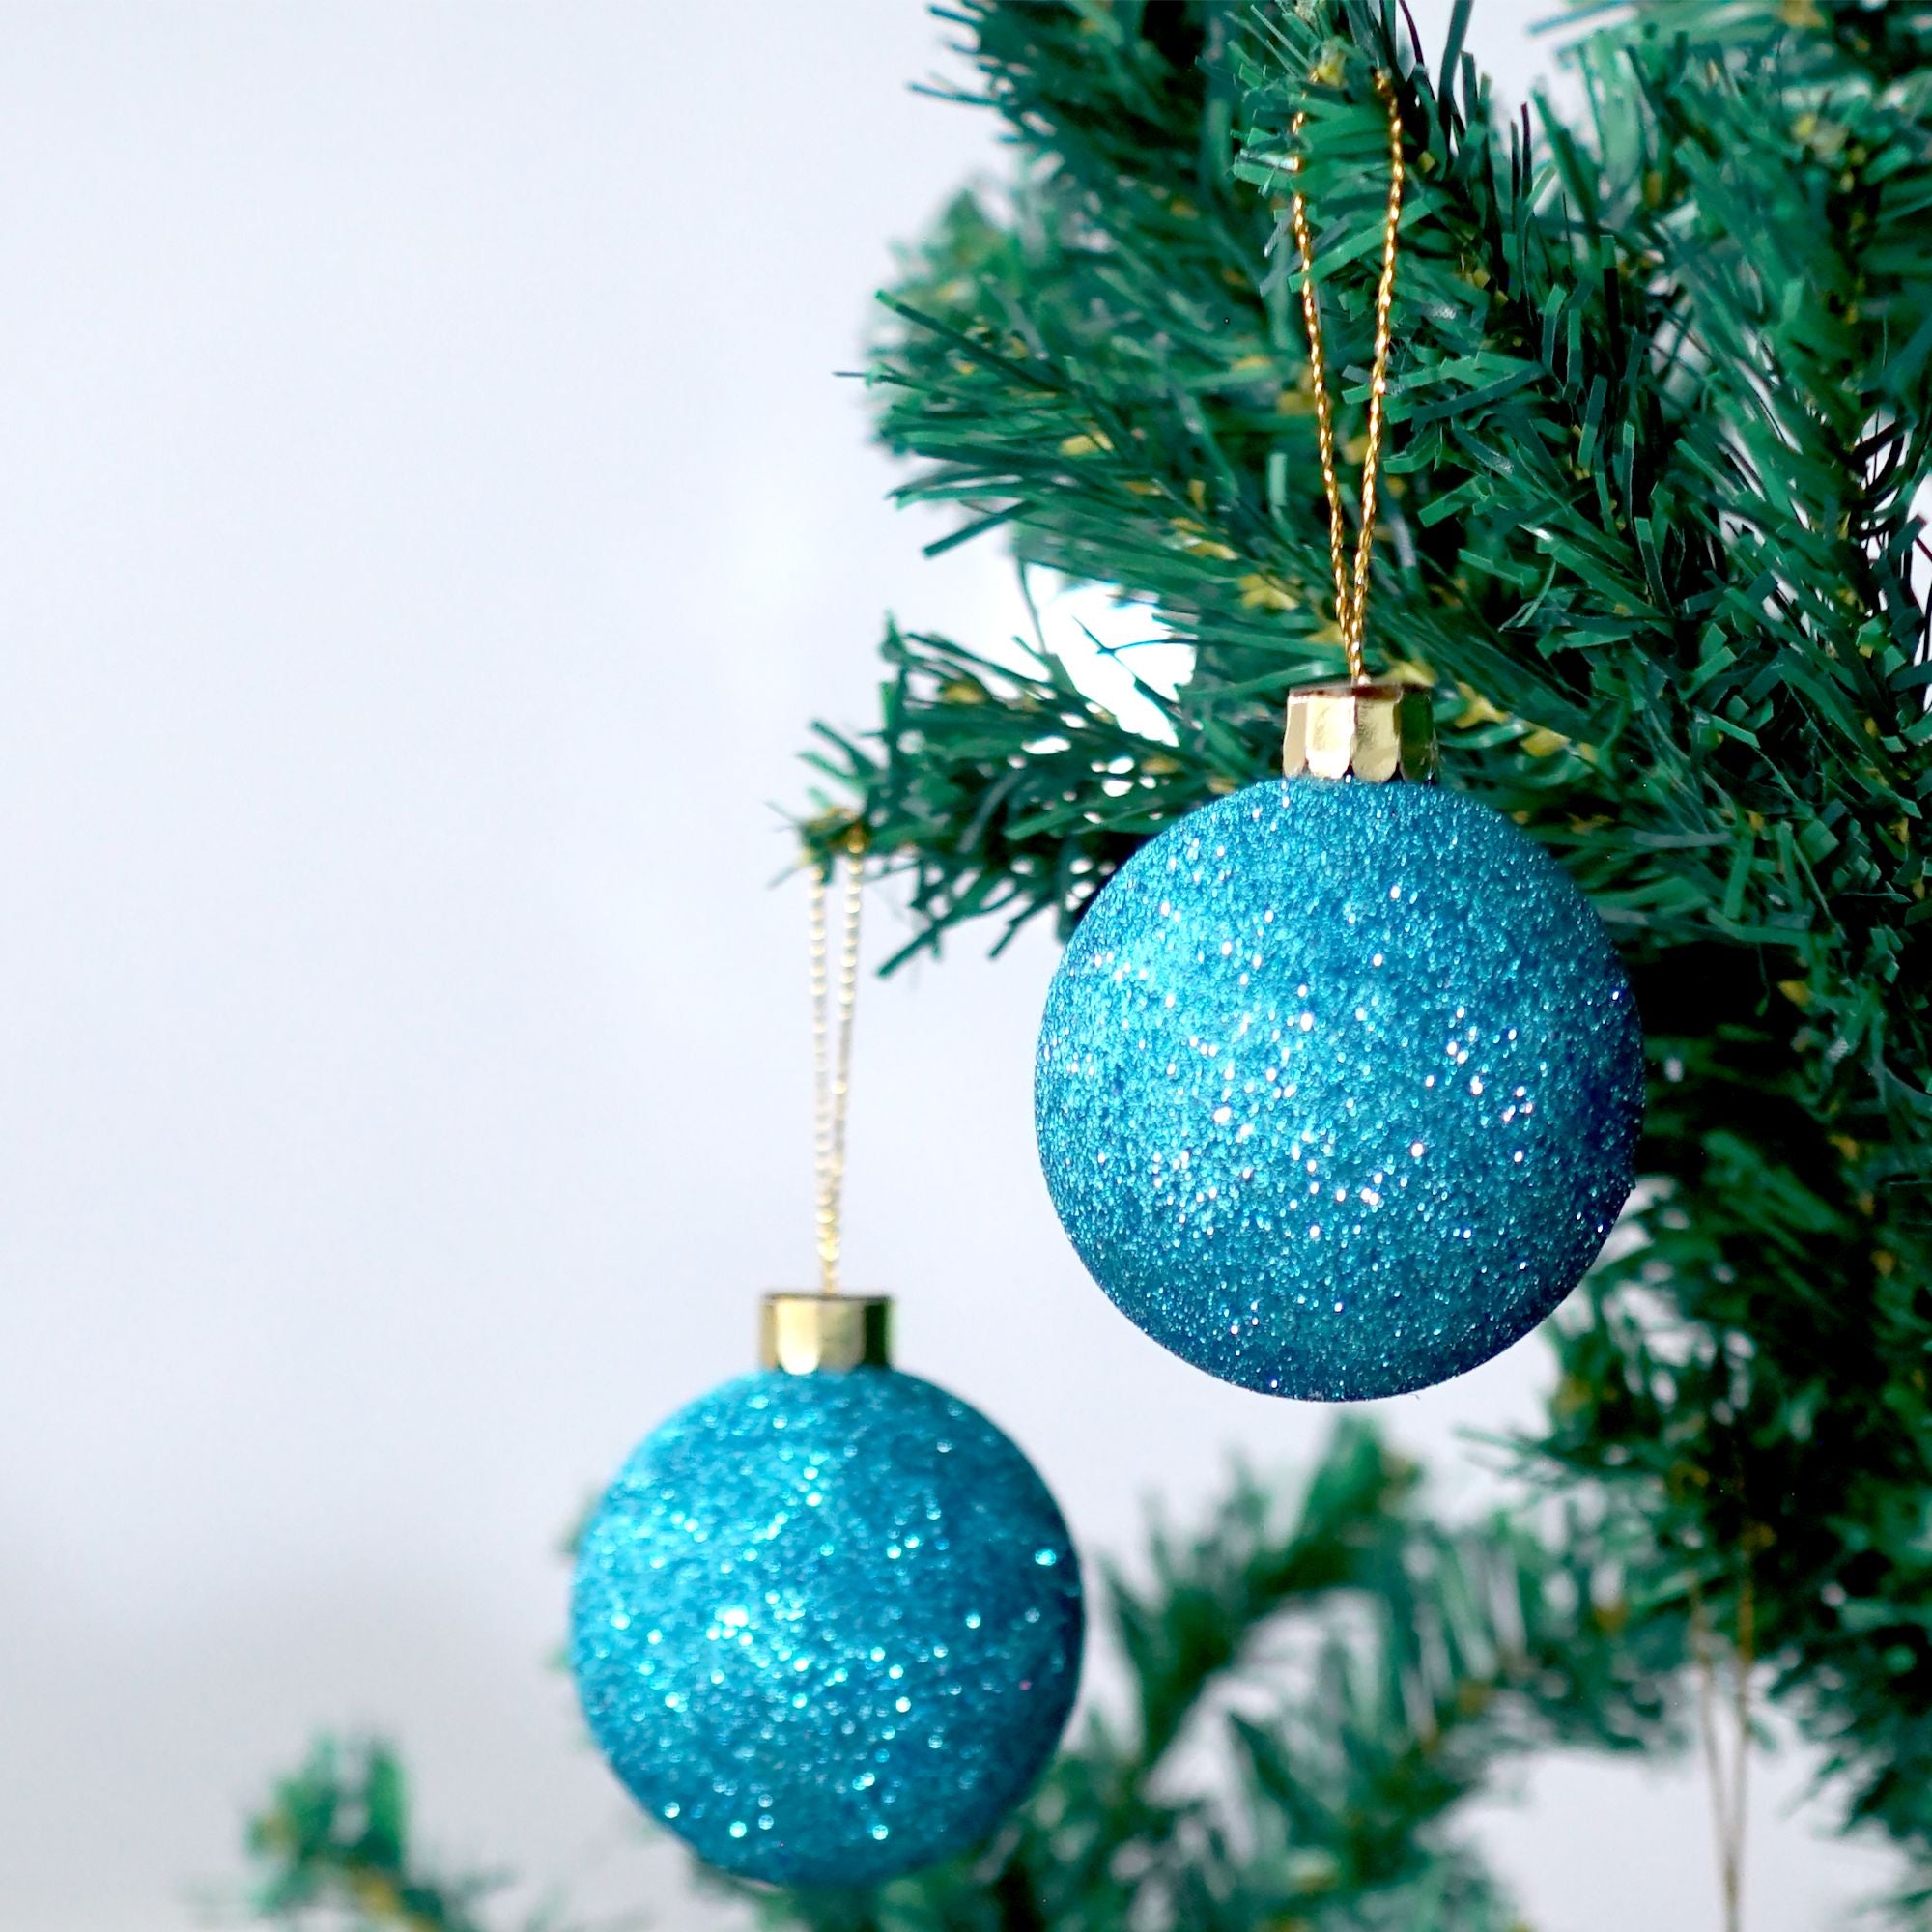 Handmade Christmas Ornaments - Glitter Baubles, 70mm, Blue, 4pc